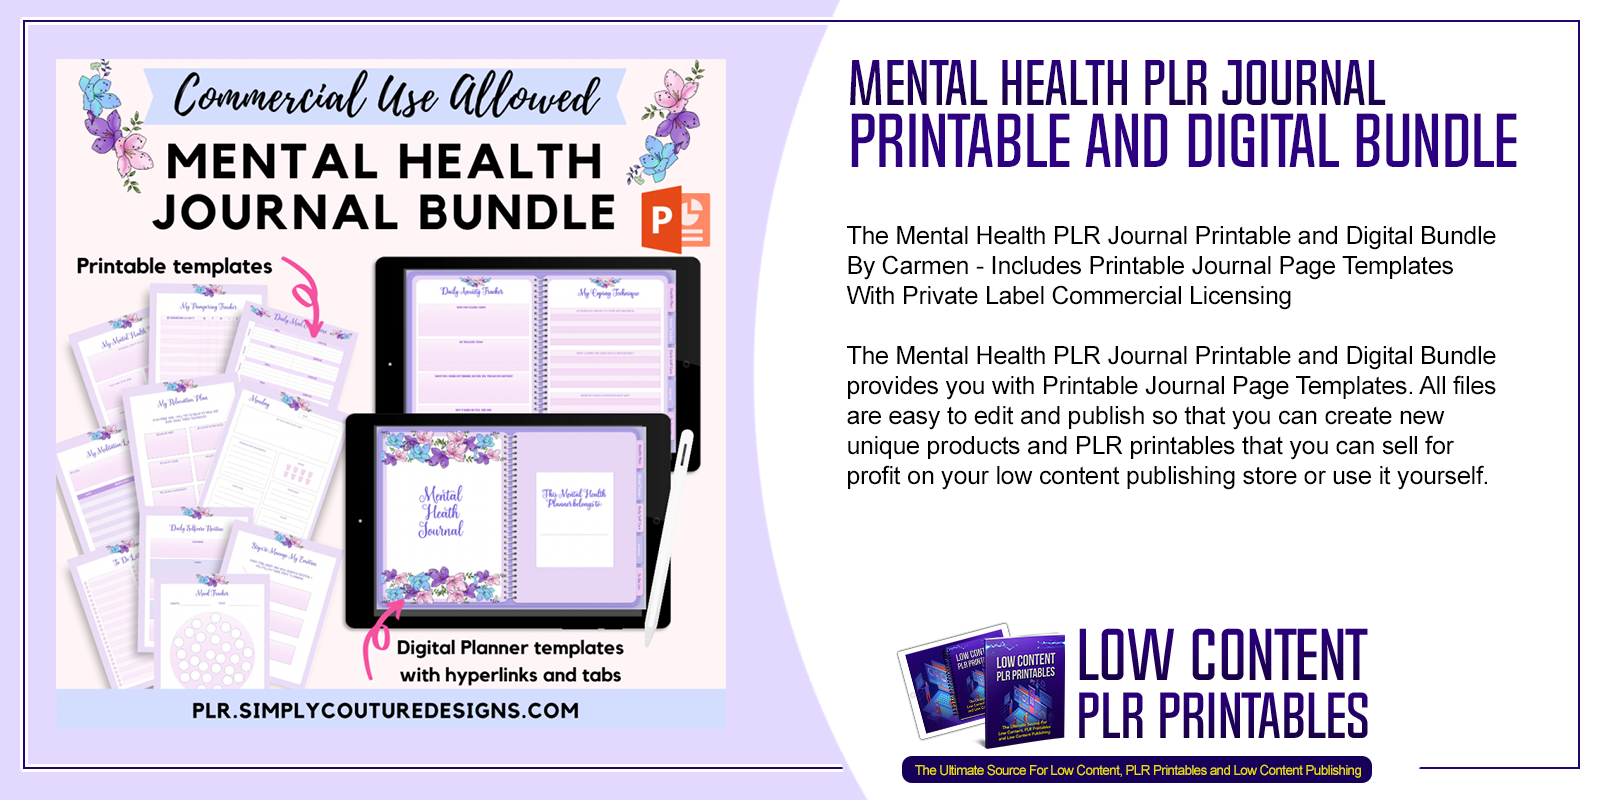 Mental Health PLR Journal Printable and Digital Bundle 2